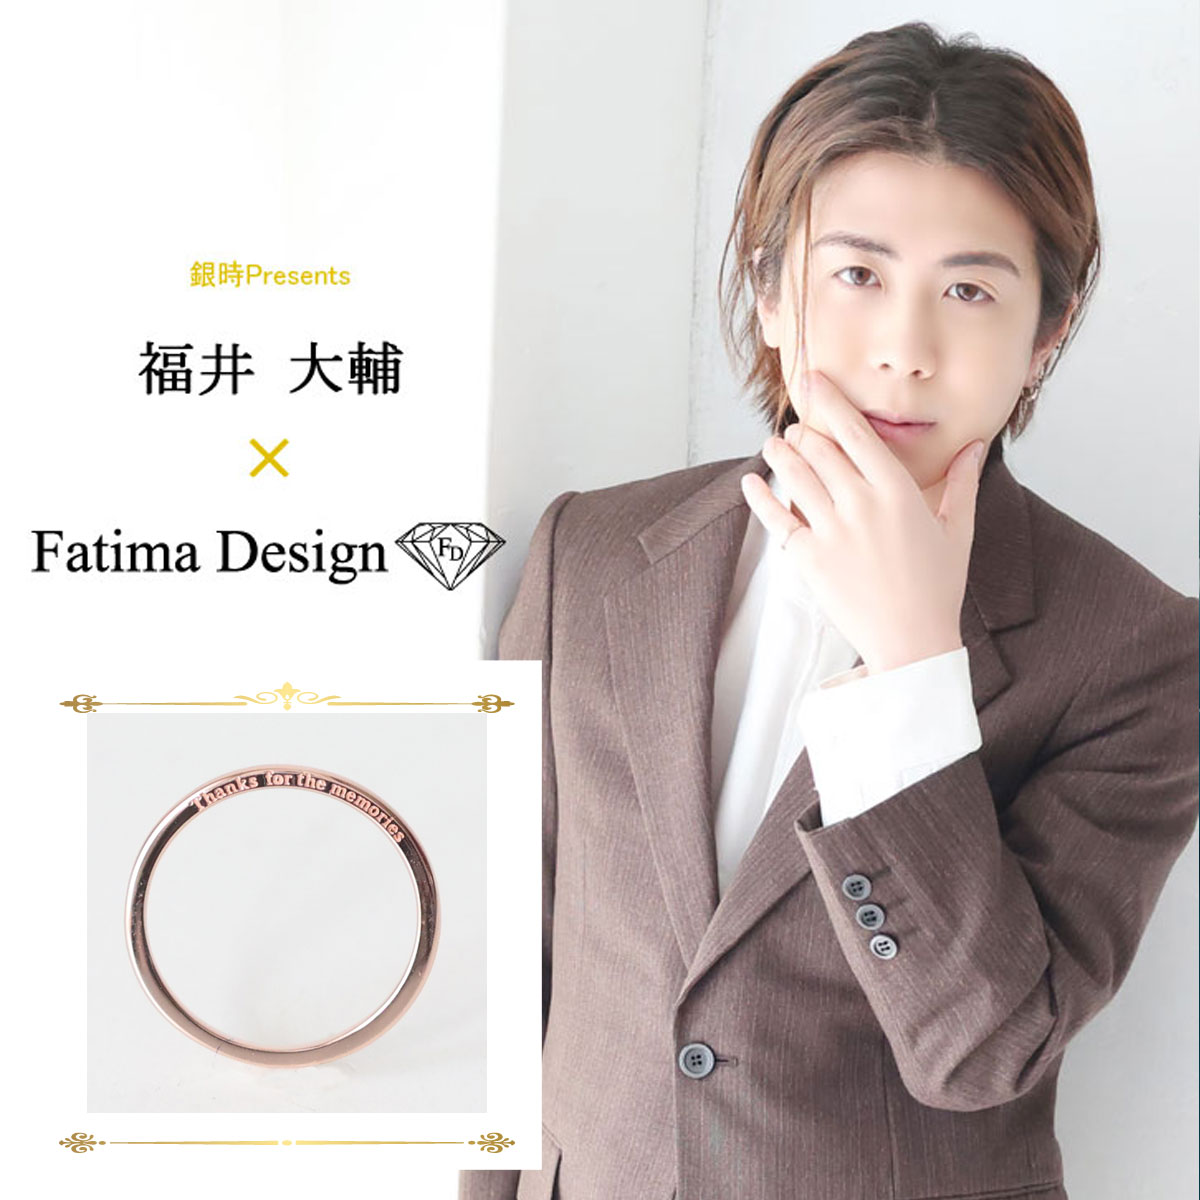 福井大輔×Fatima Design